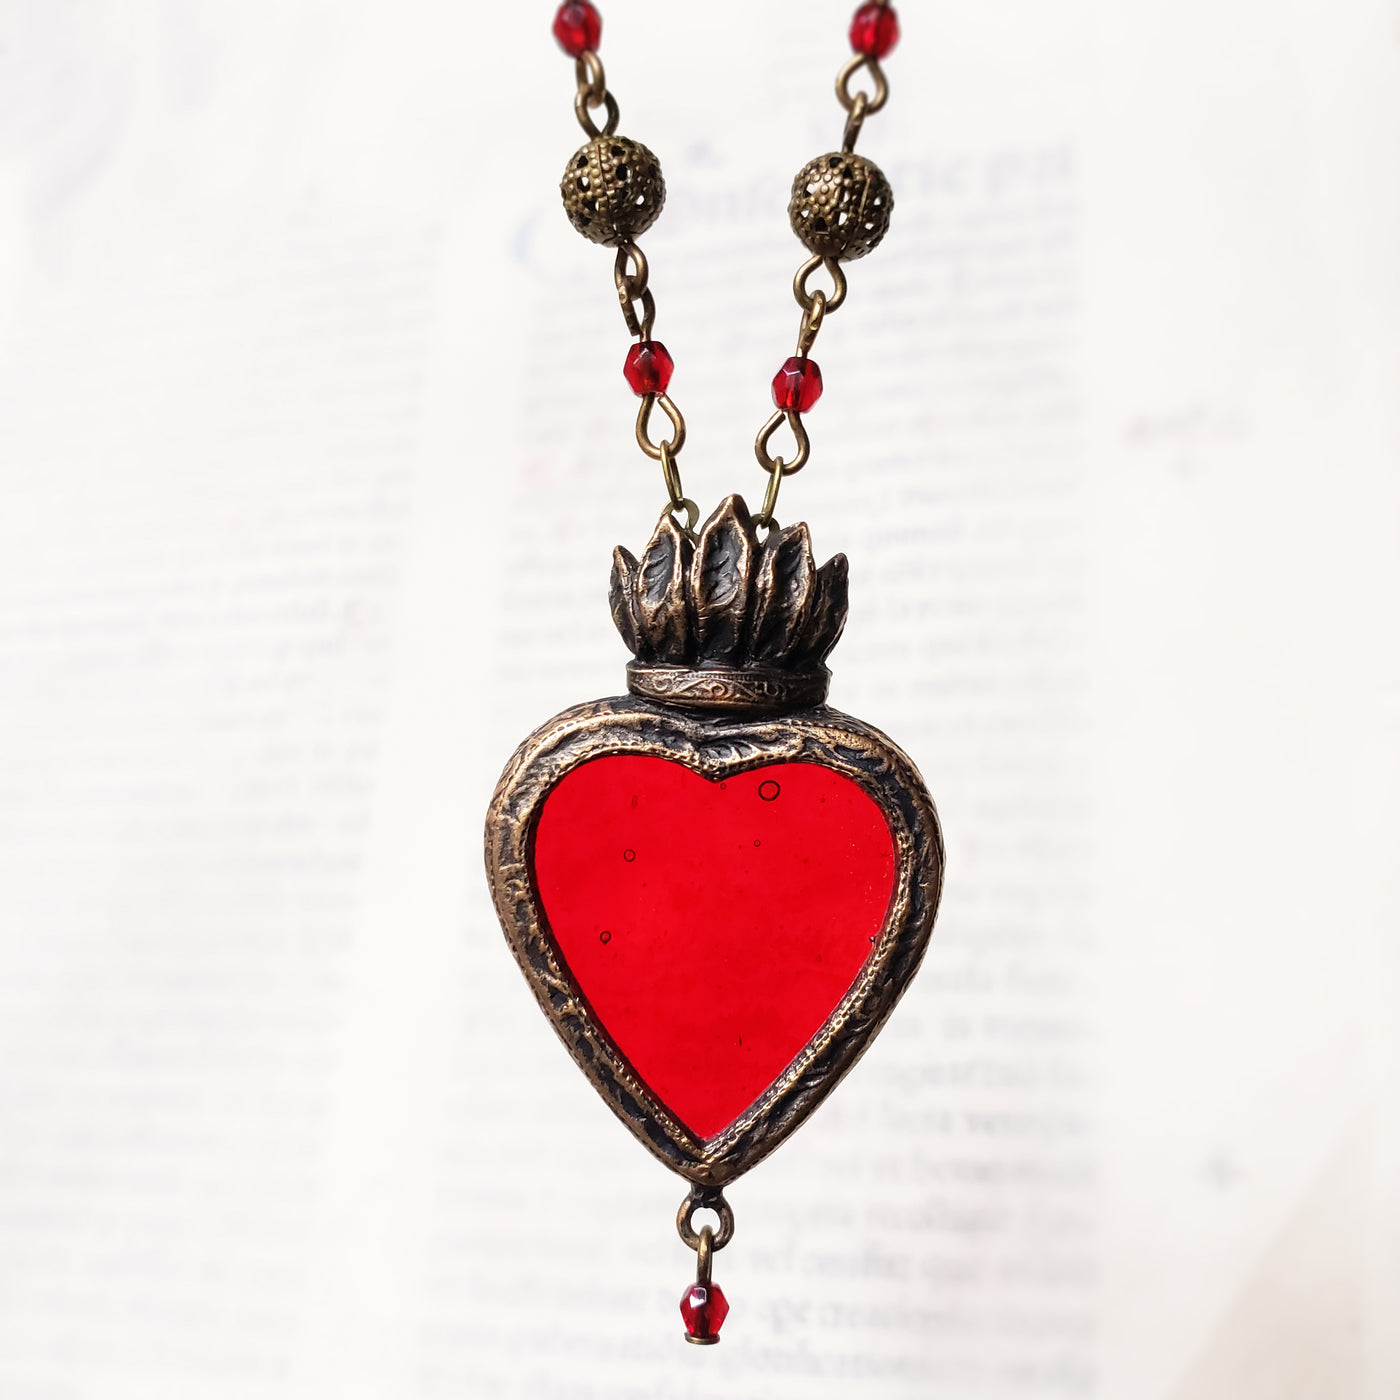 incendium amoris - a sacred heart amulet